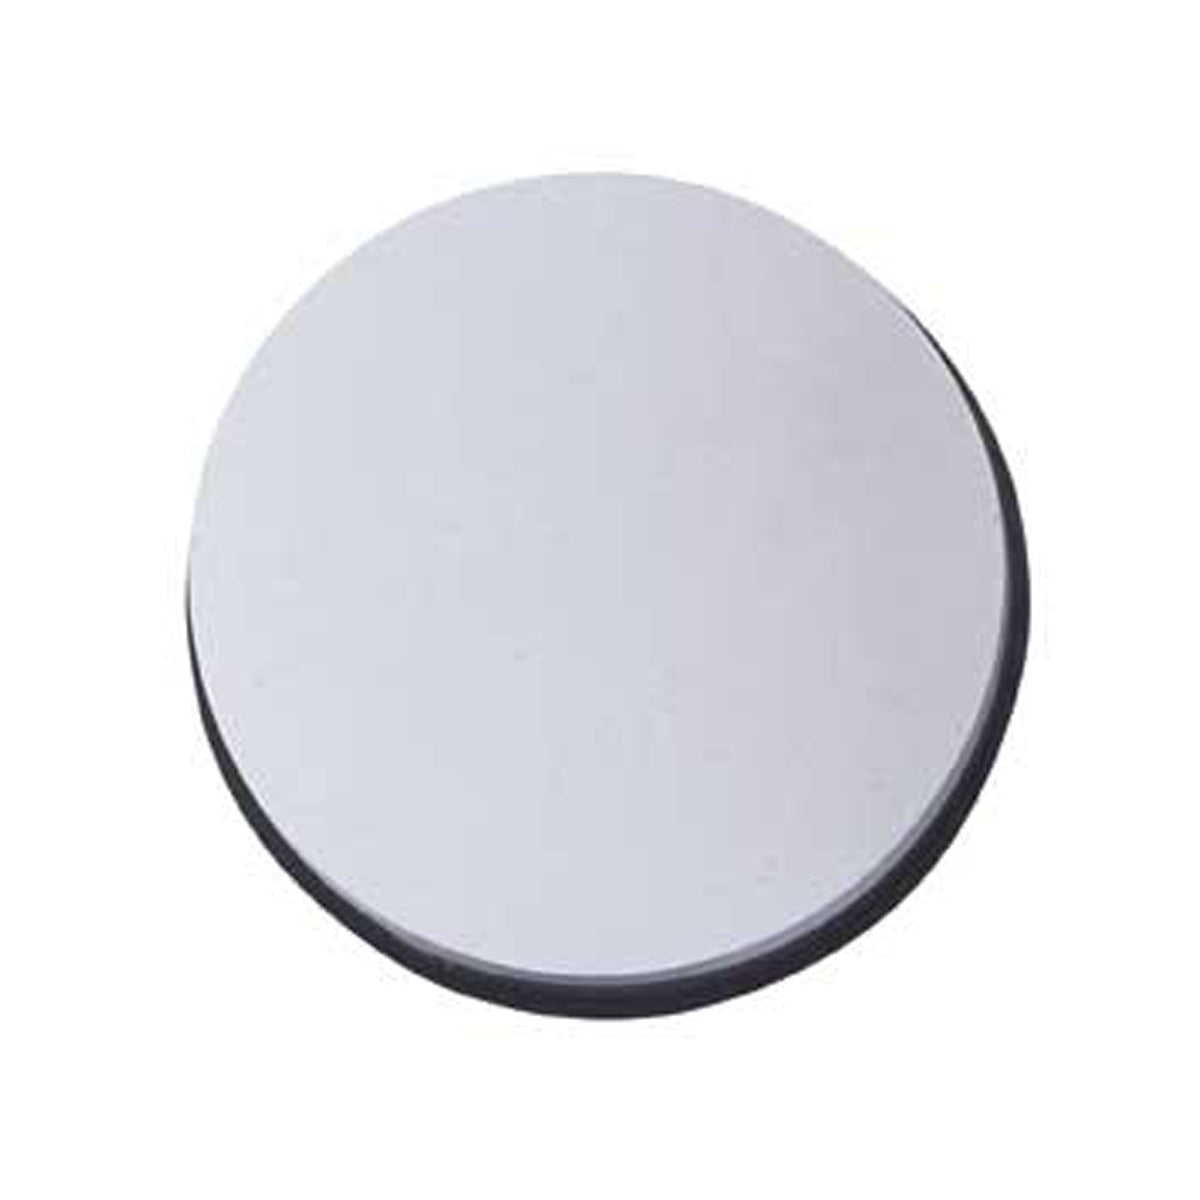 Katadyn Vario Ceramic Disc Replacement in  by GOHUNT | Katadyn - GOHUNT Shop